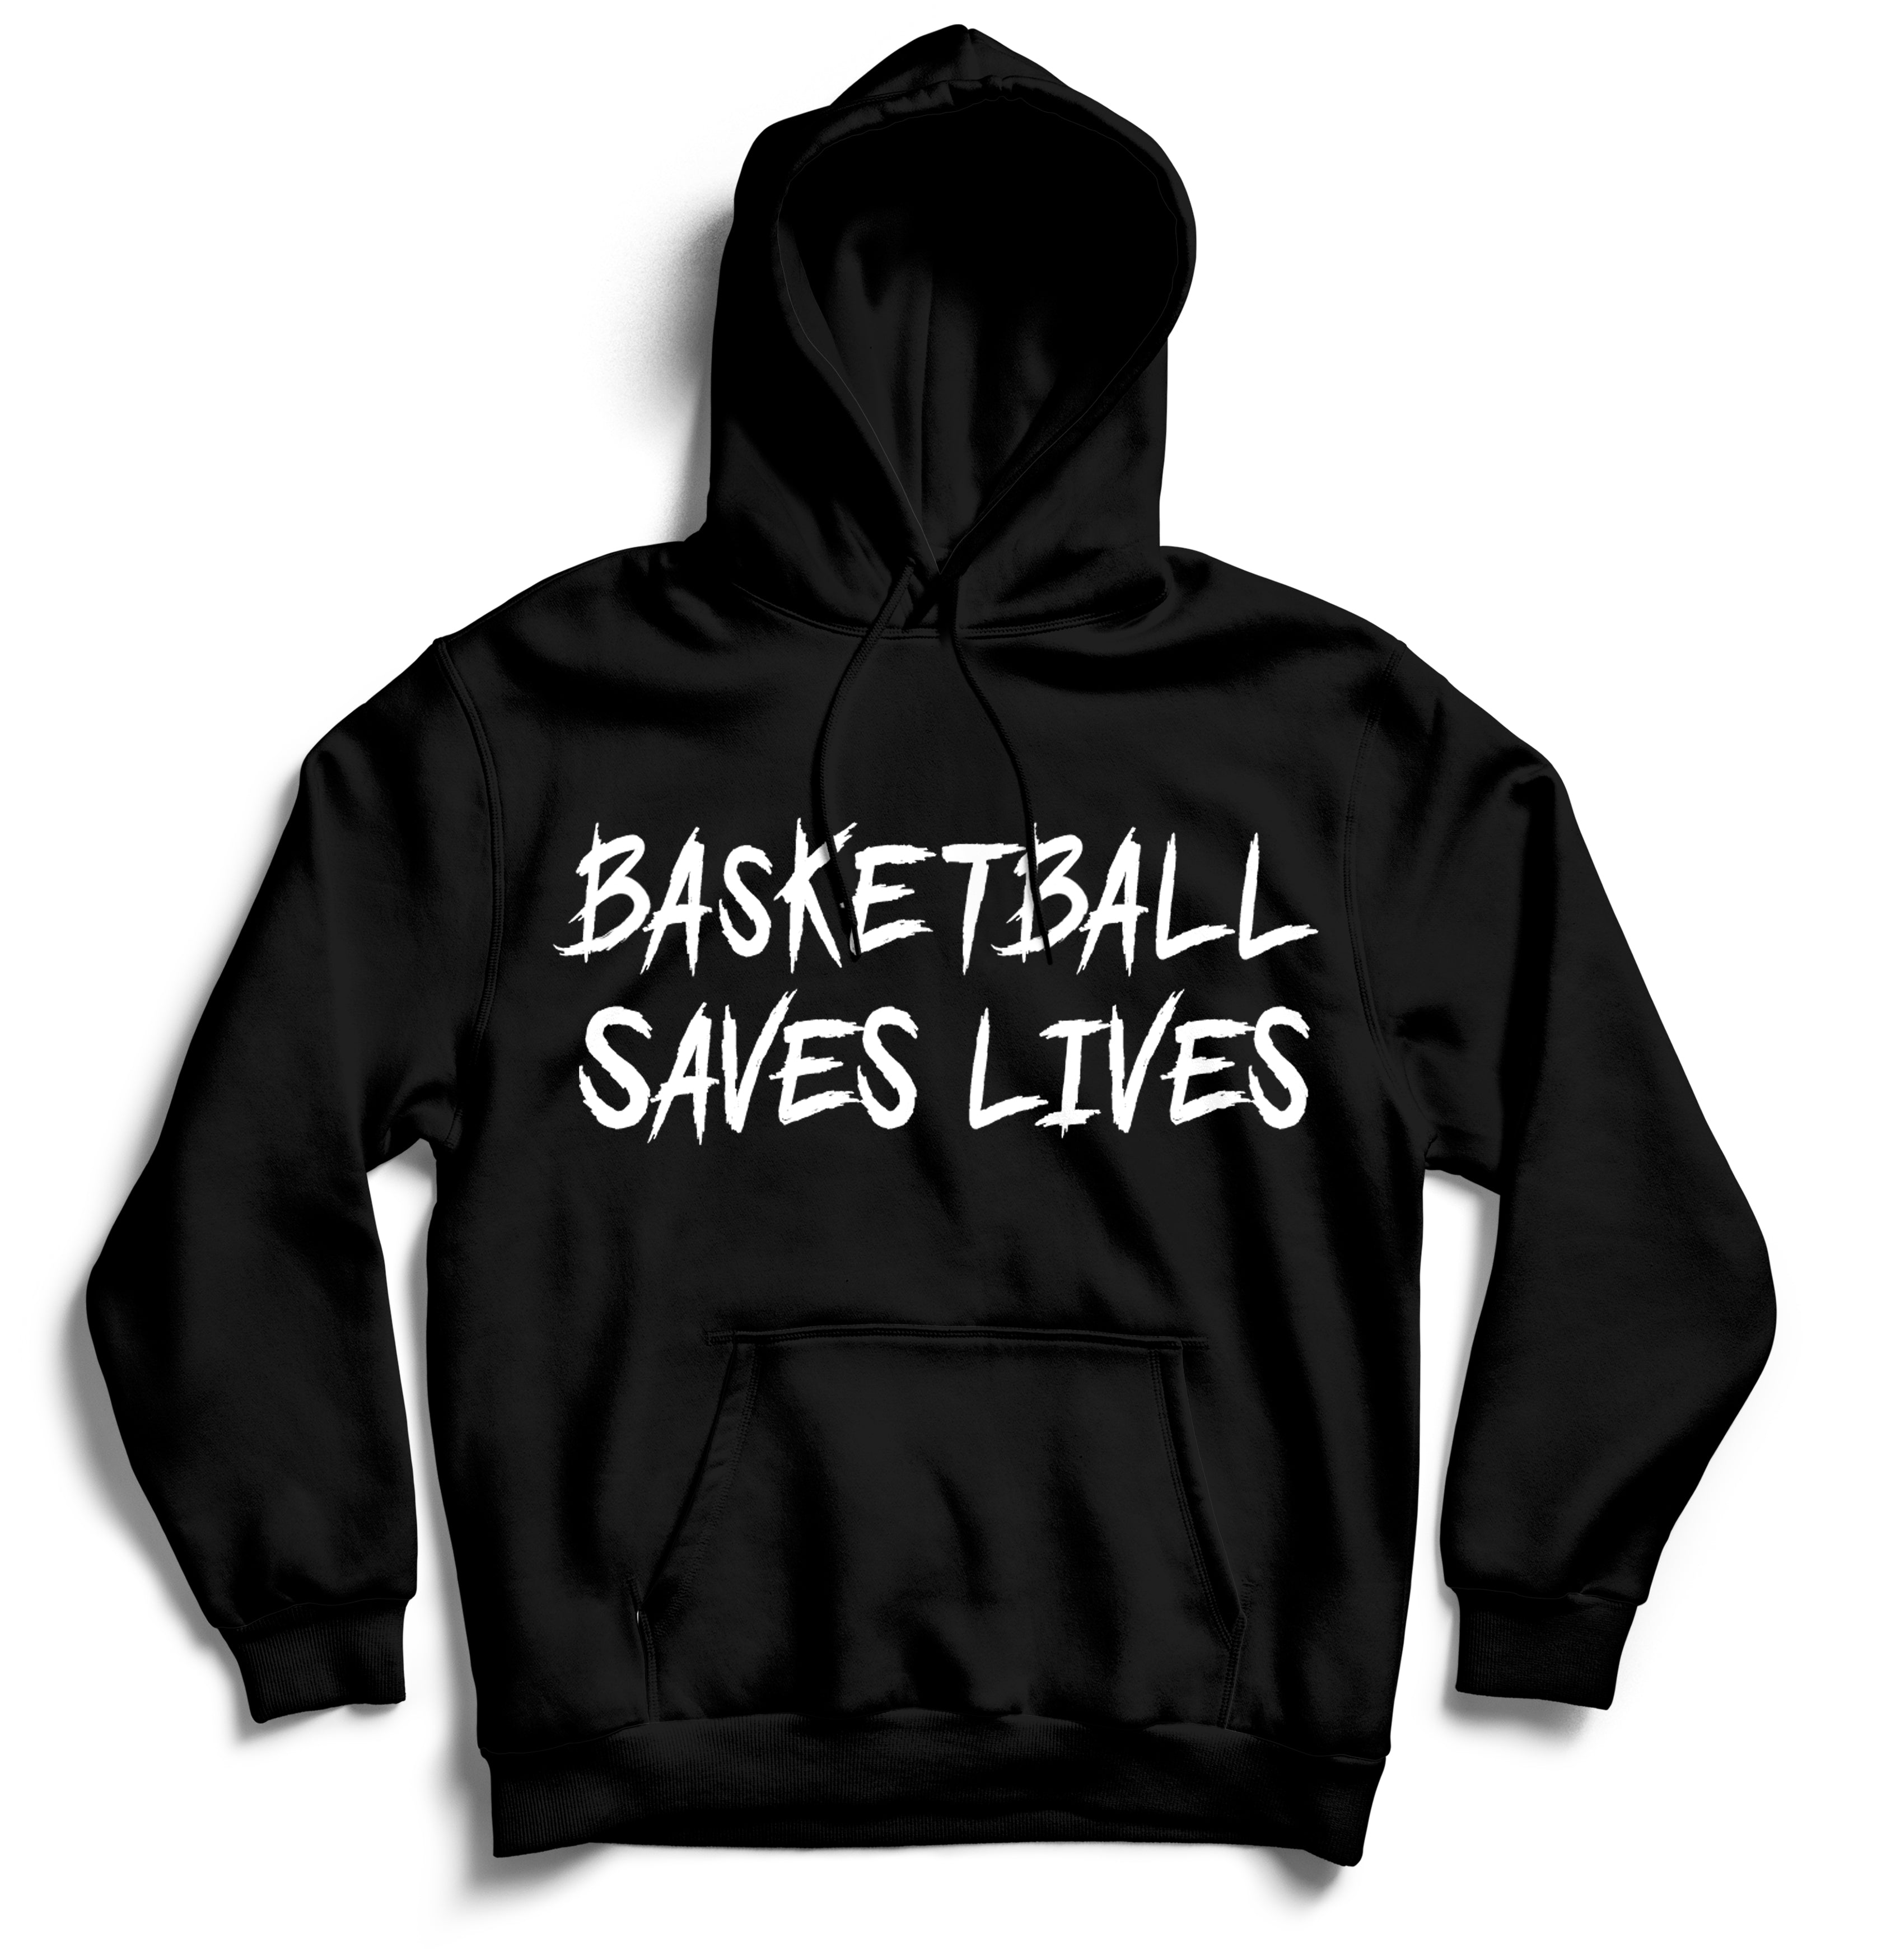 Basketball Saves Lives - Hoodie - Black